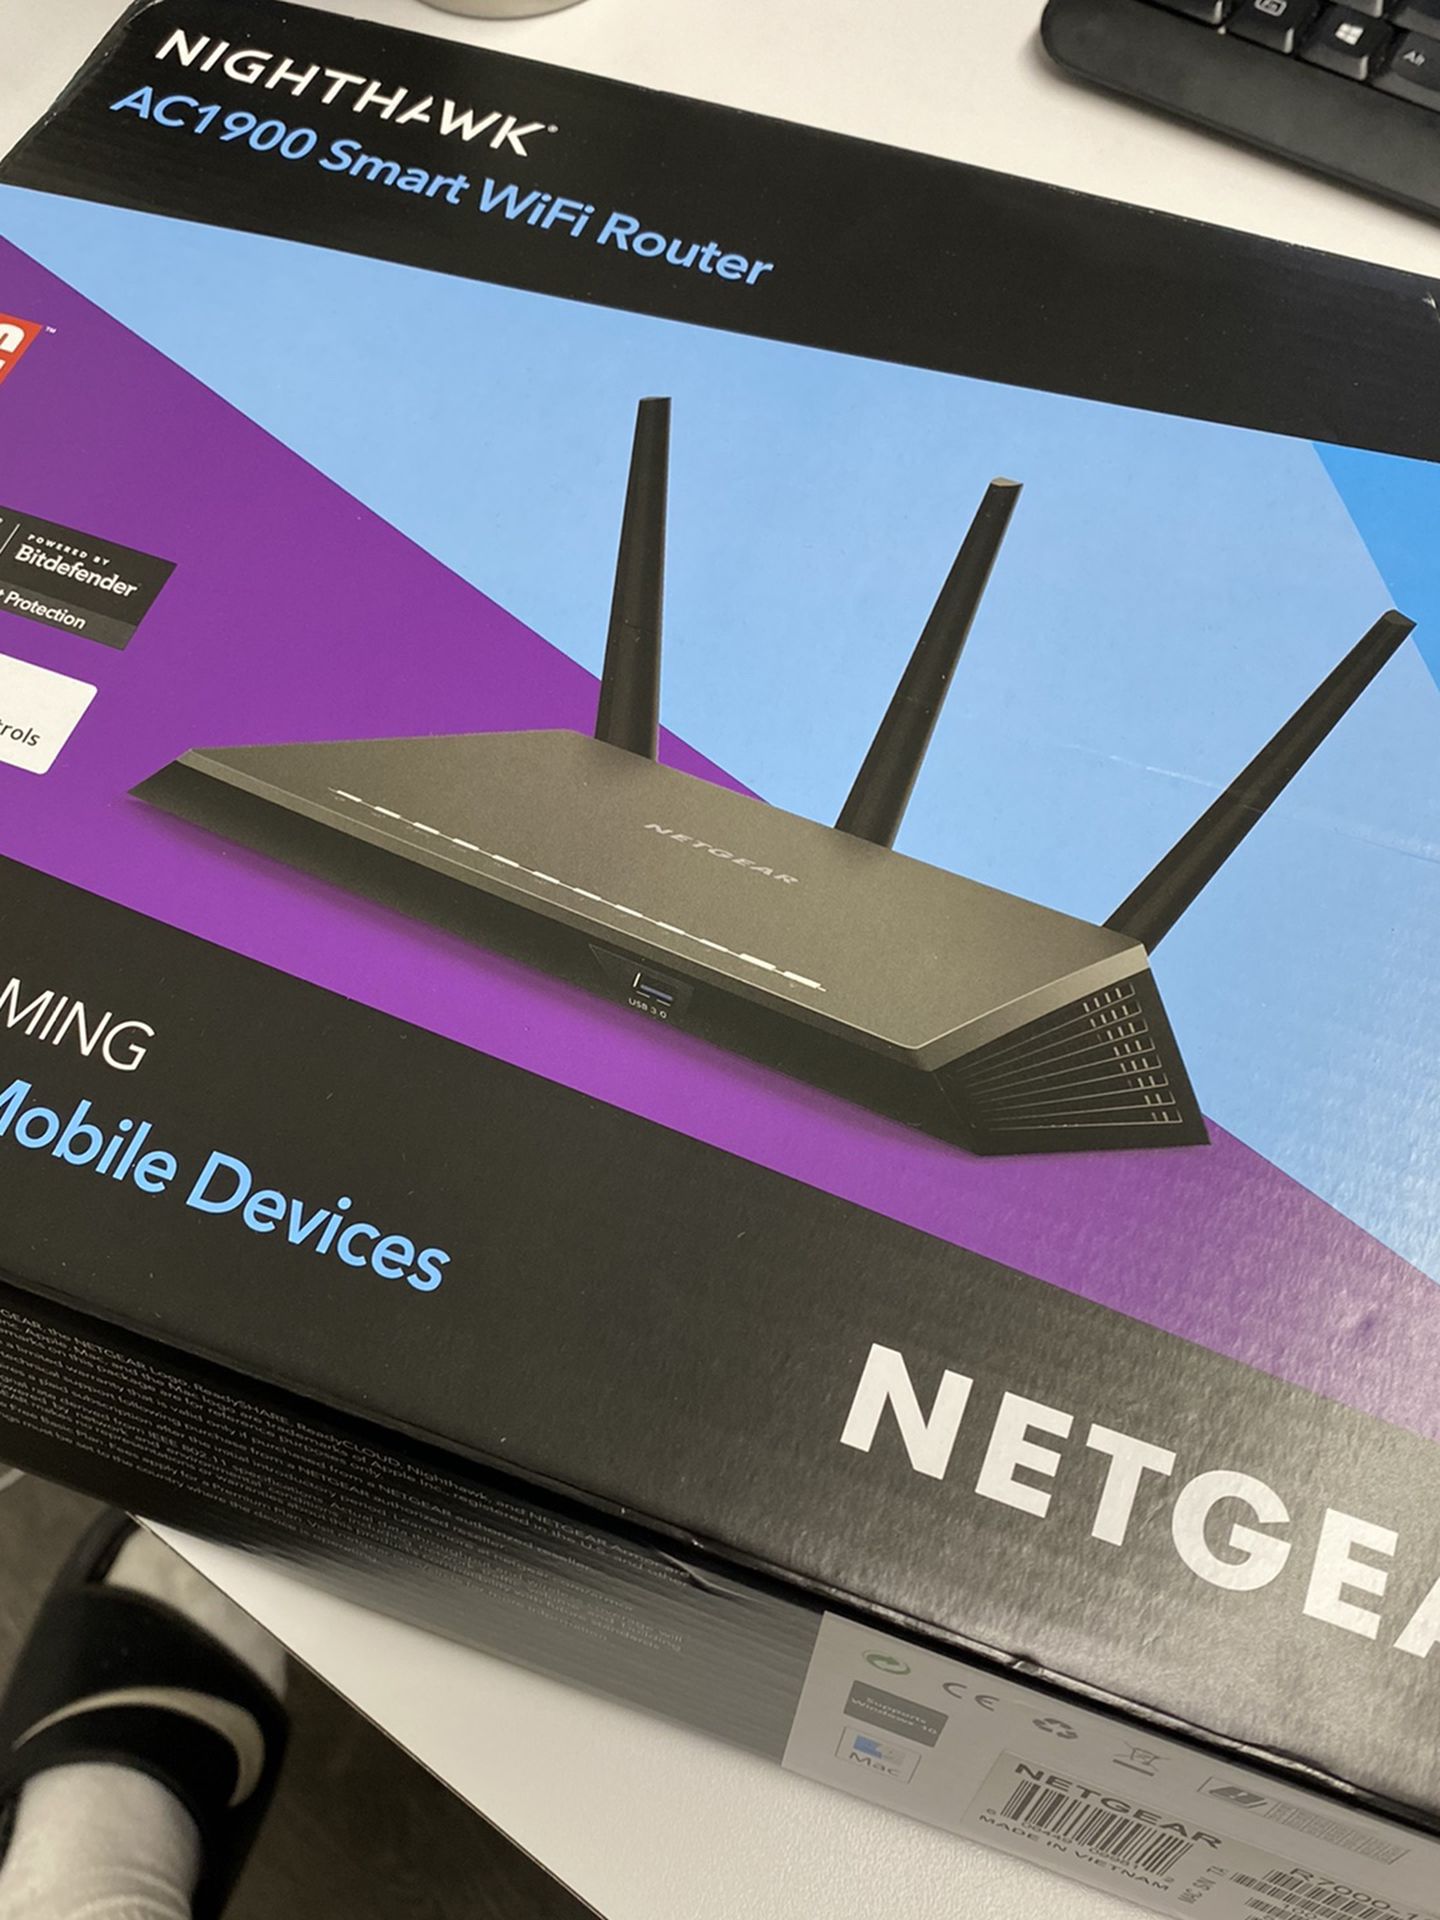 Netgear Nighthawk Smart Wifi Router Ac1900 Wireless Speed Up To 1900 Mbps